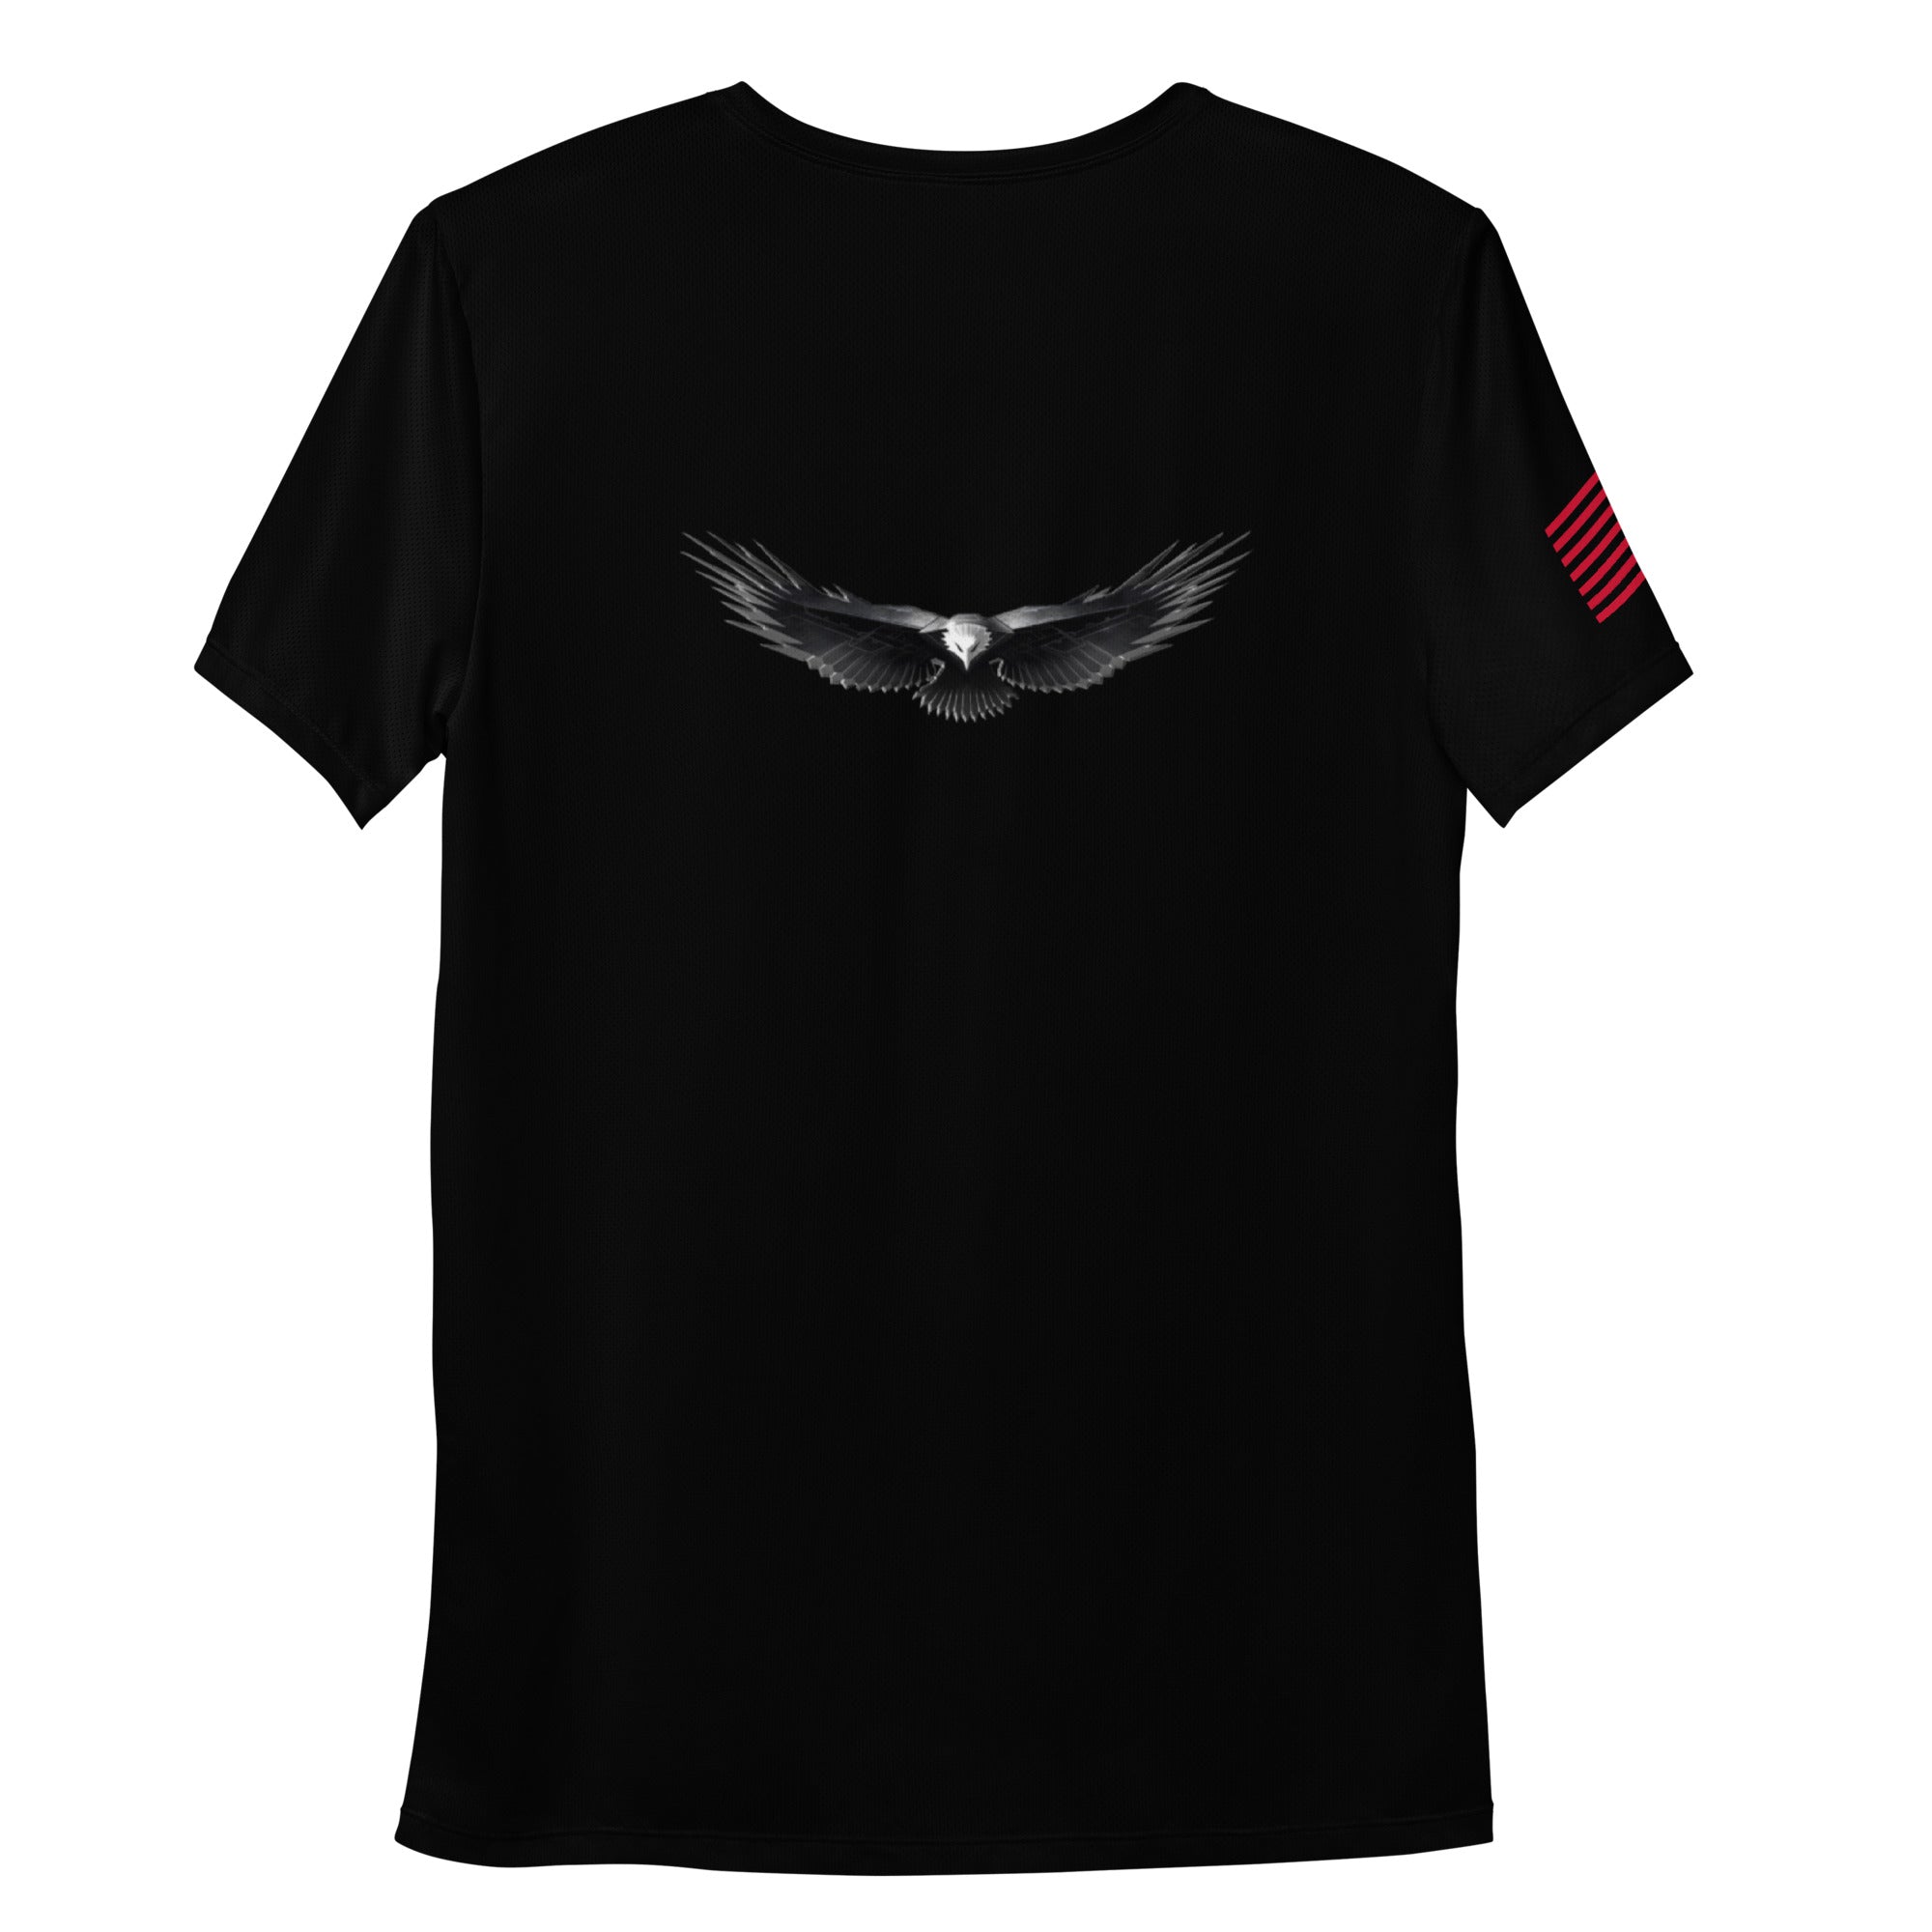 PHNY Performance Short Sleeve Shirt Men's Athletic T-shirt (Back and right print)